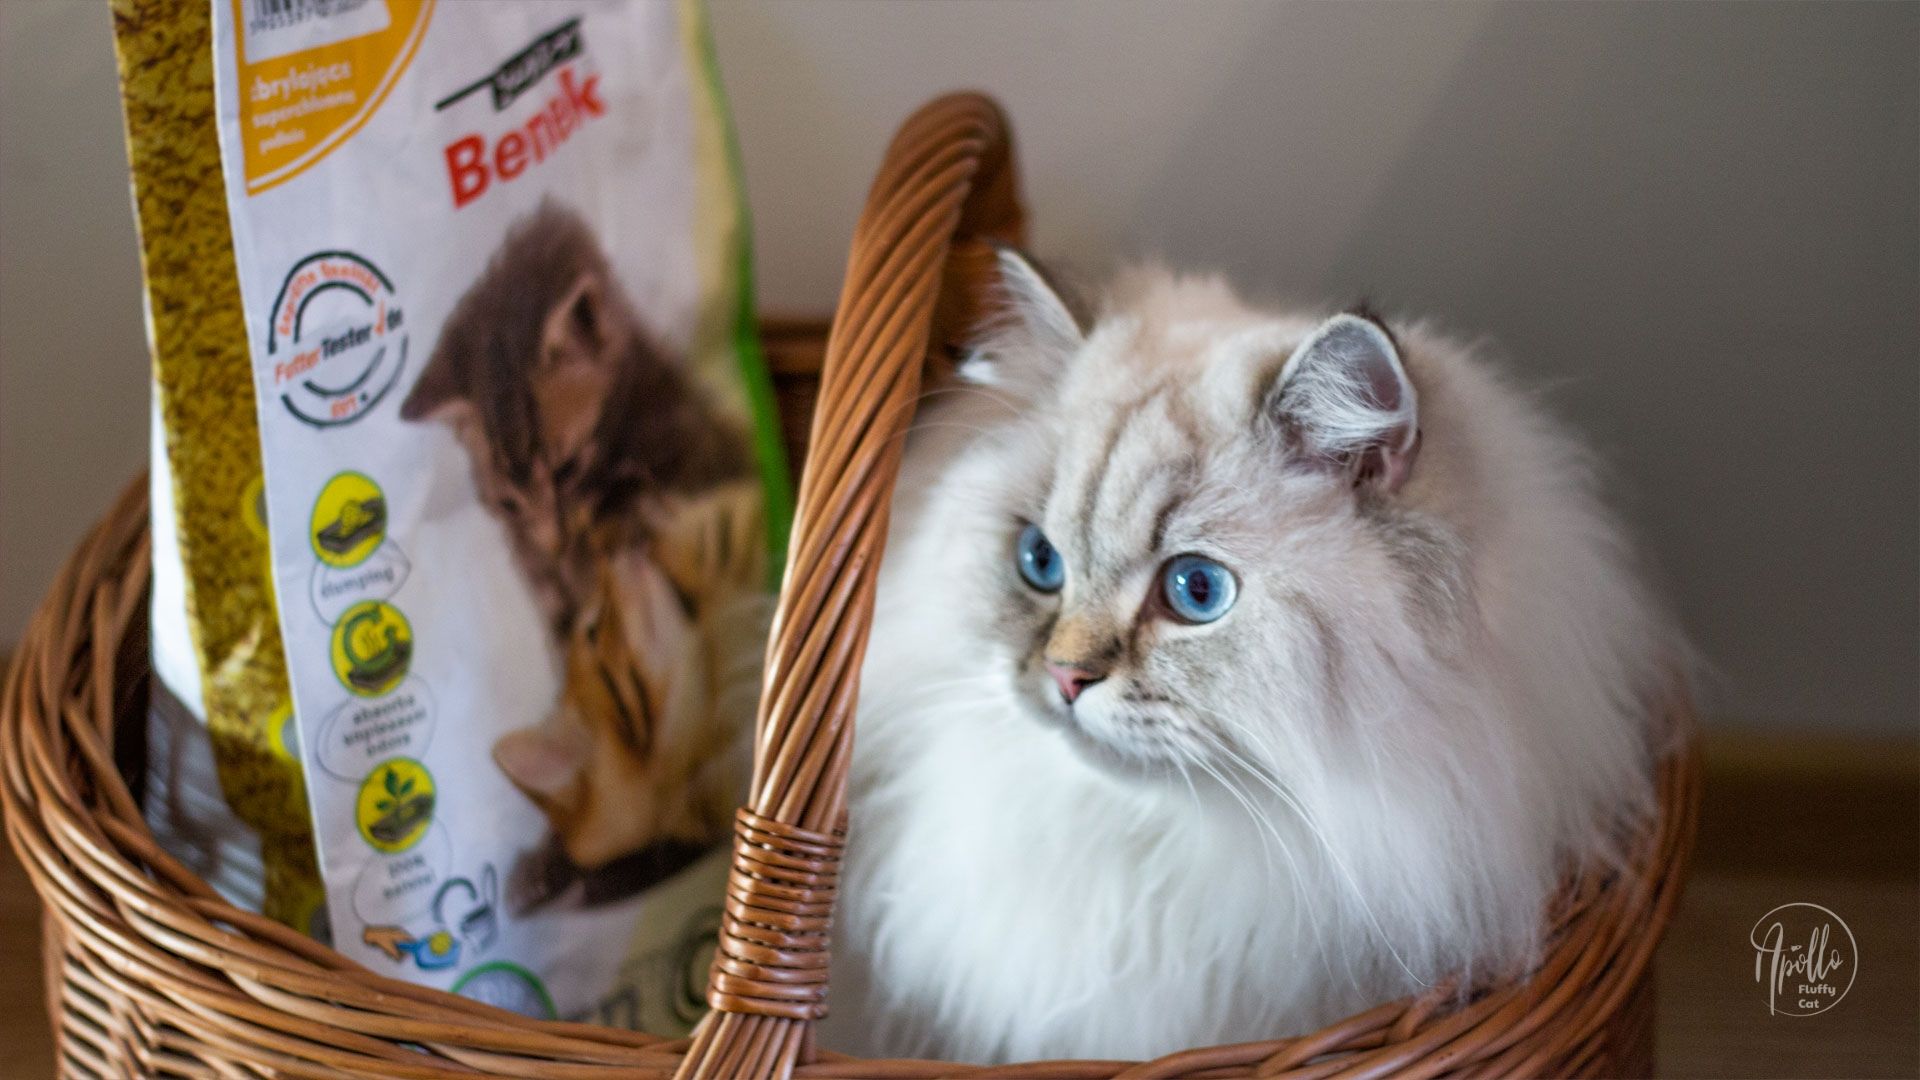 Review: Super Benek Corn Cat litter